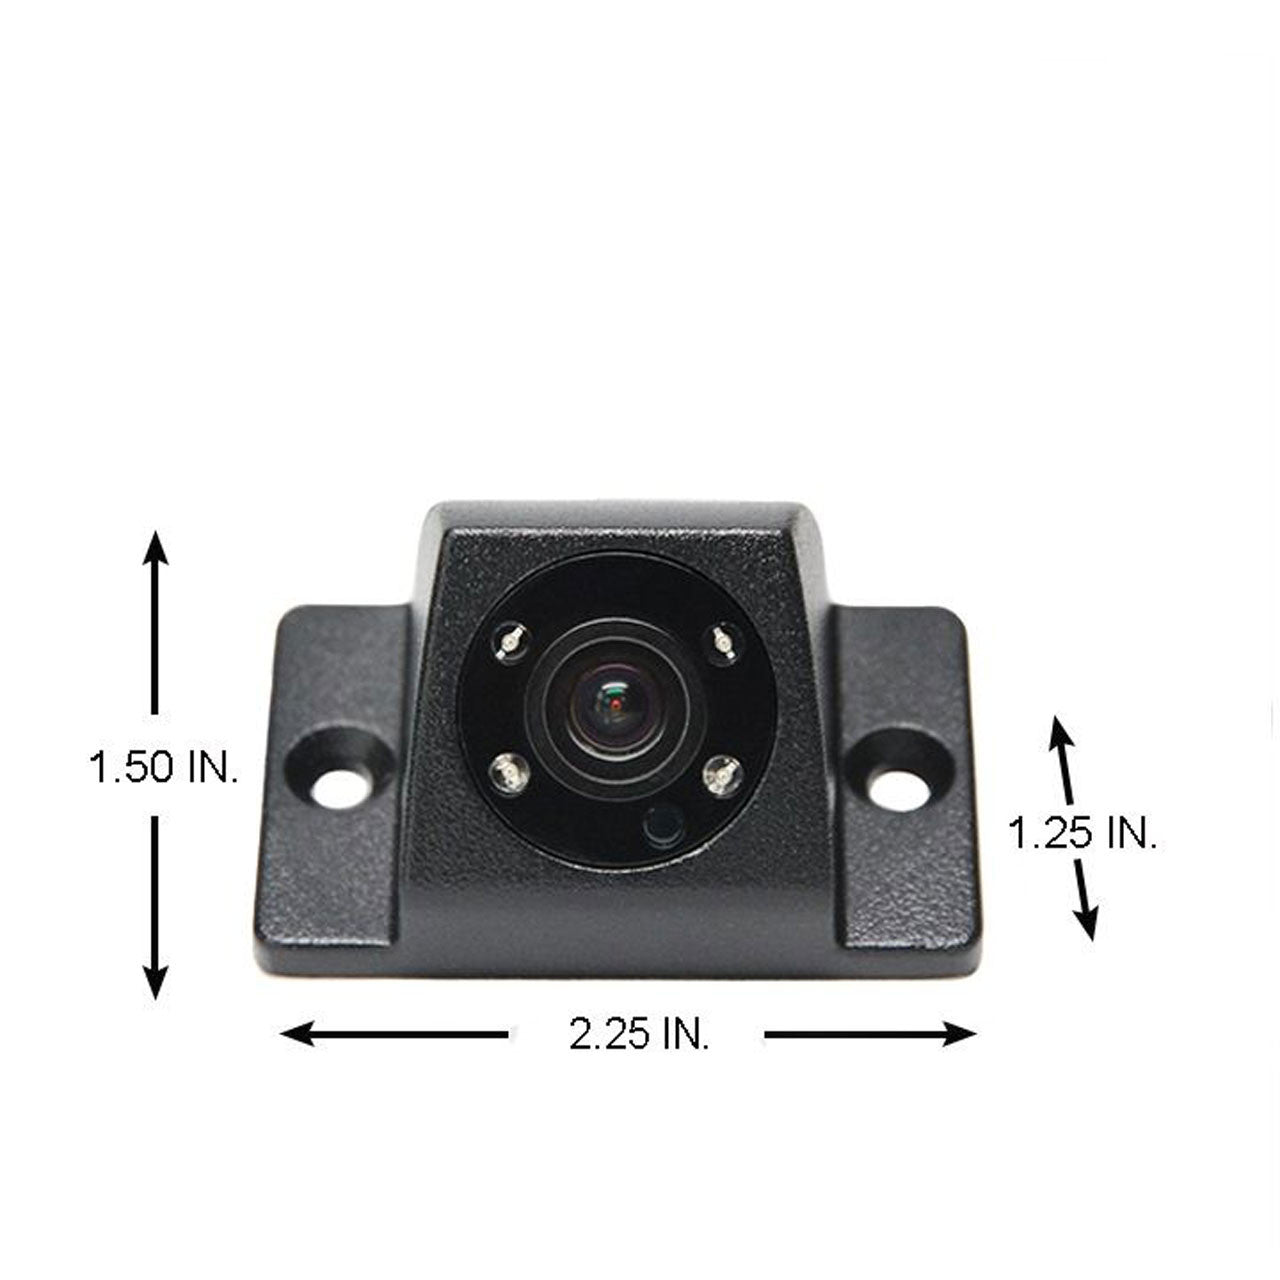 Analog HD Surface Mount Backup Camera with Infra-red Illuminators, 66&